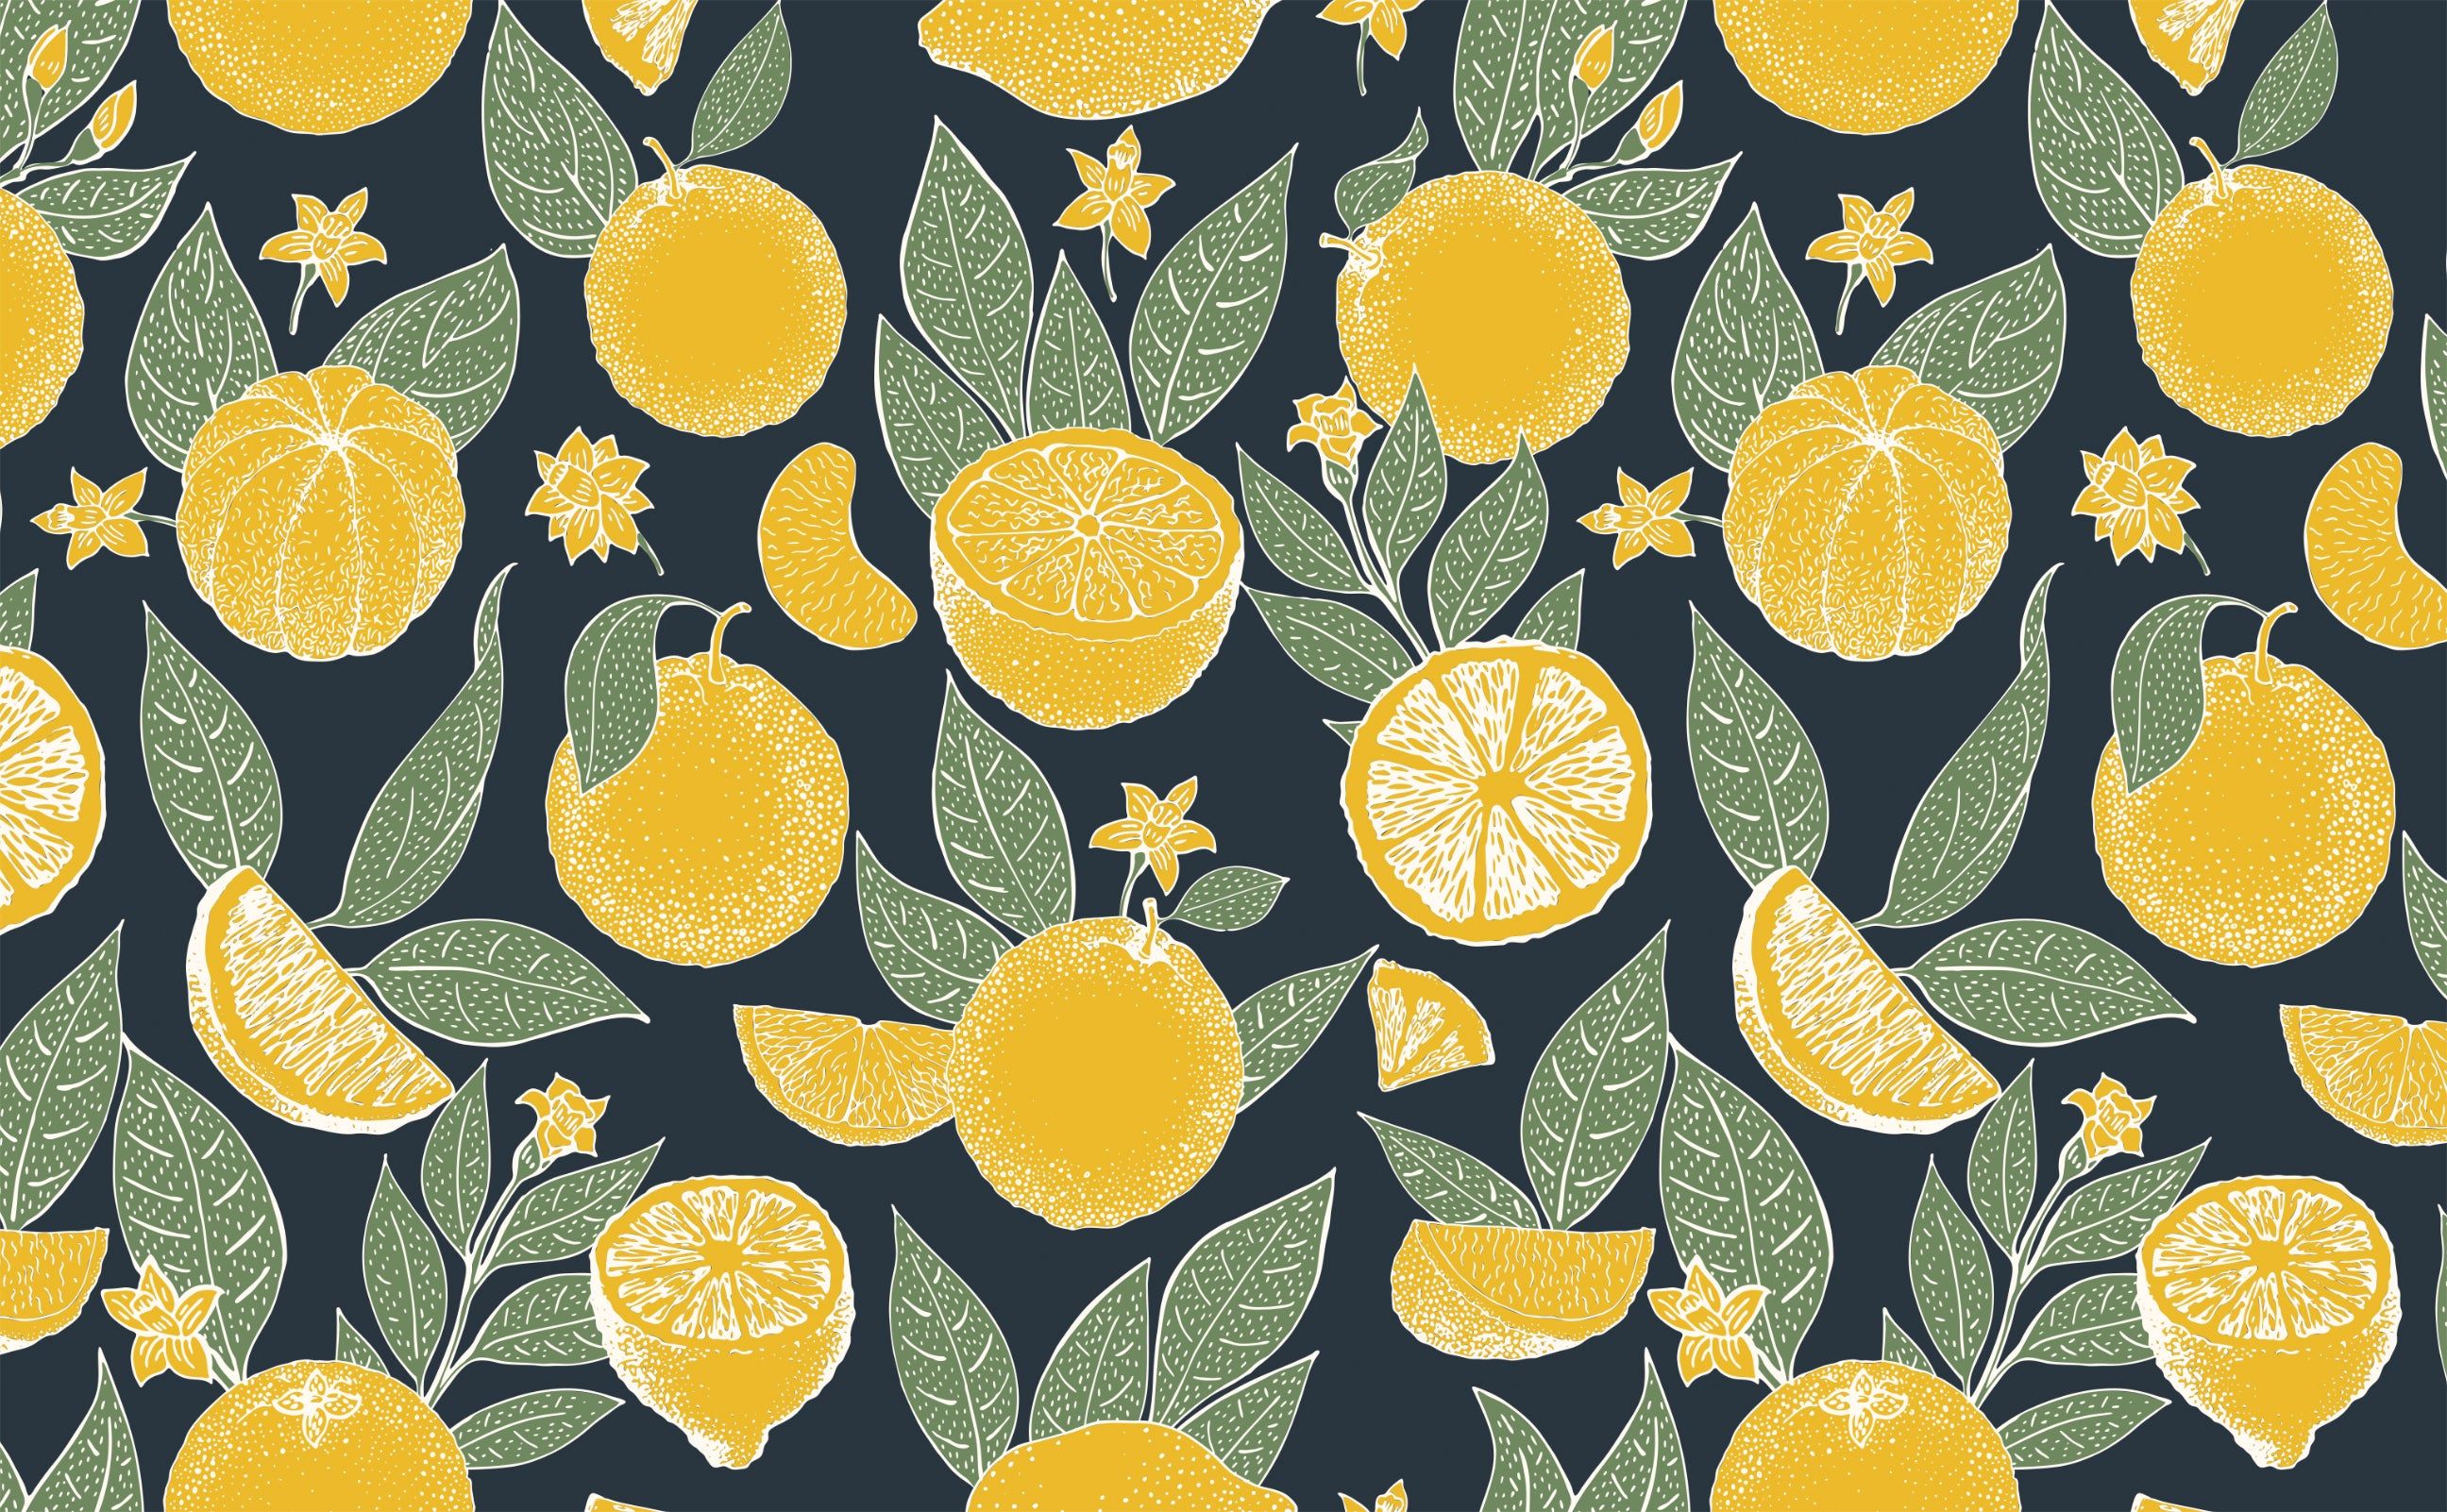 A pattern of lemons and leaves - Lemon